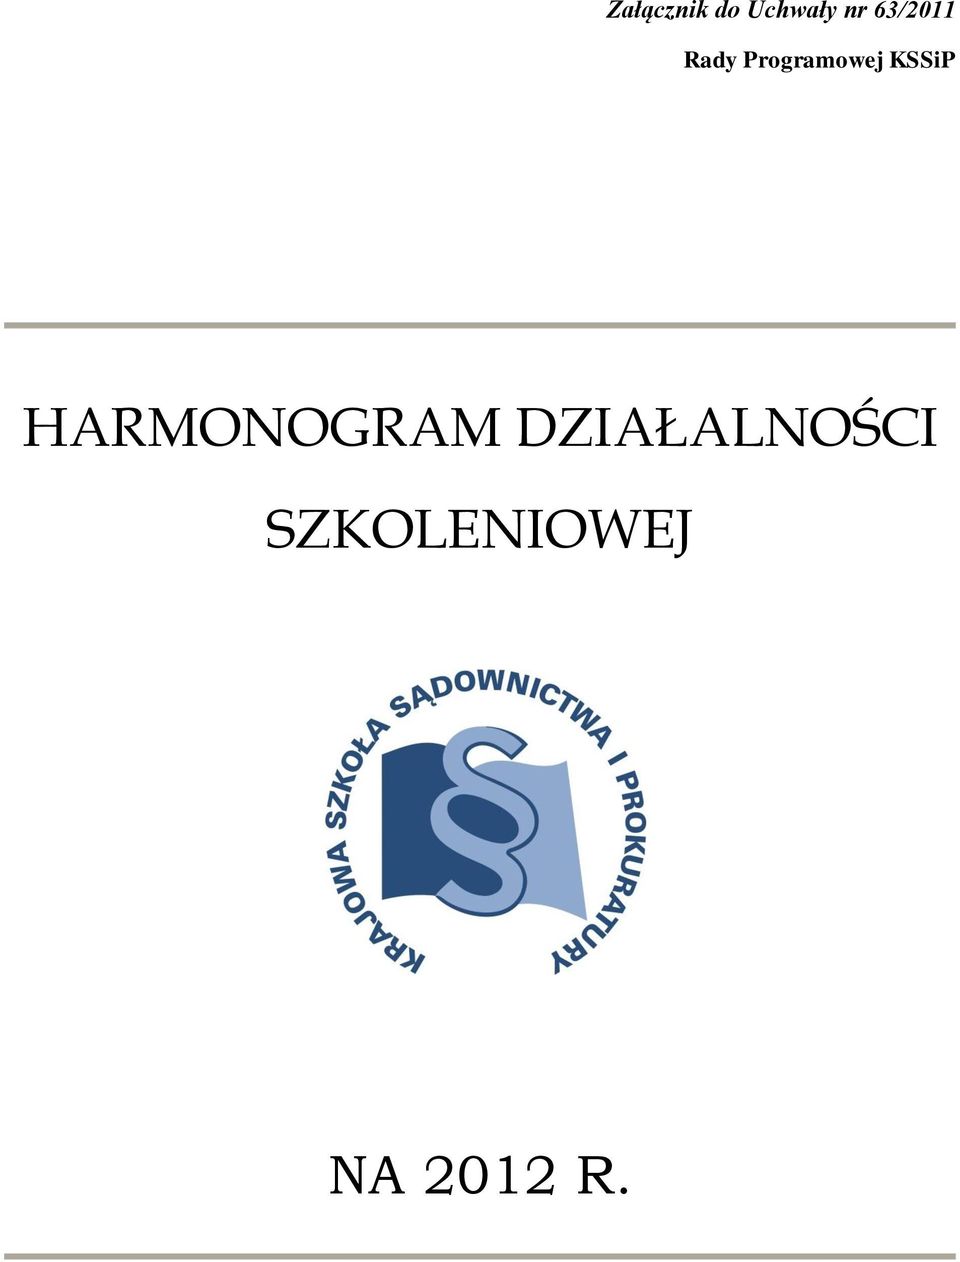 KSSiP HARMONOGRAM